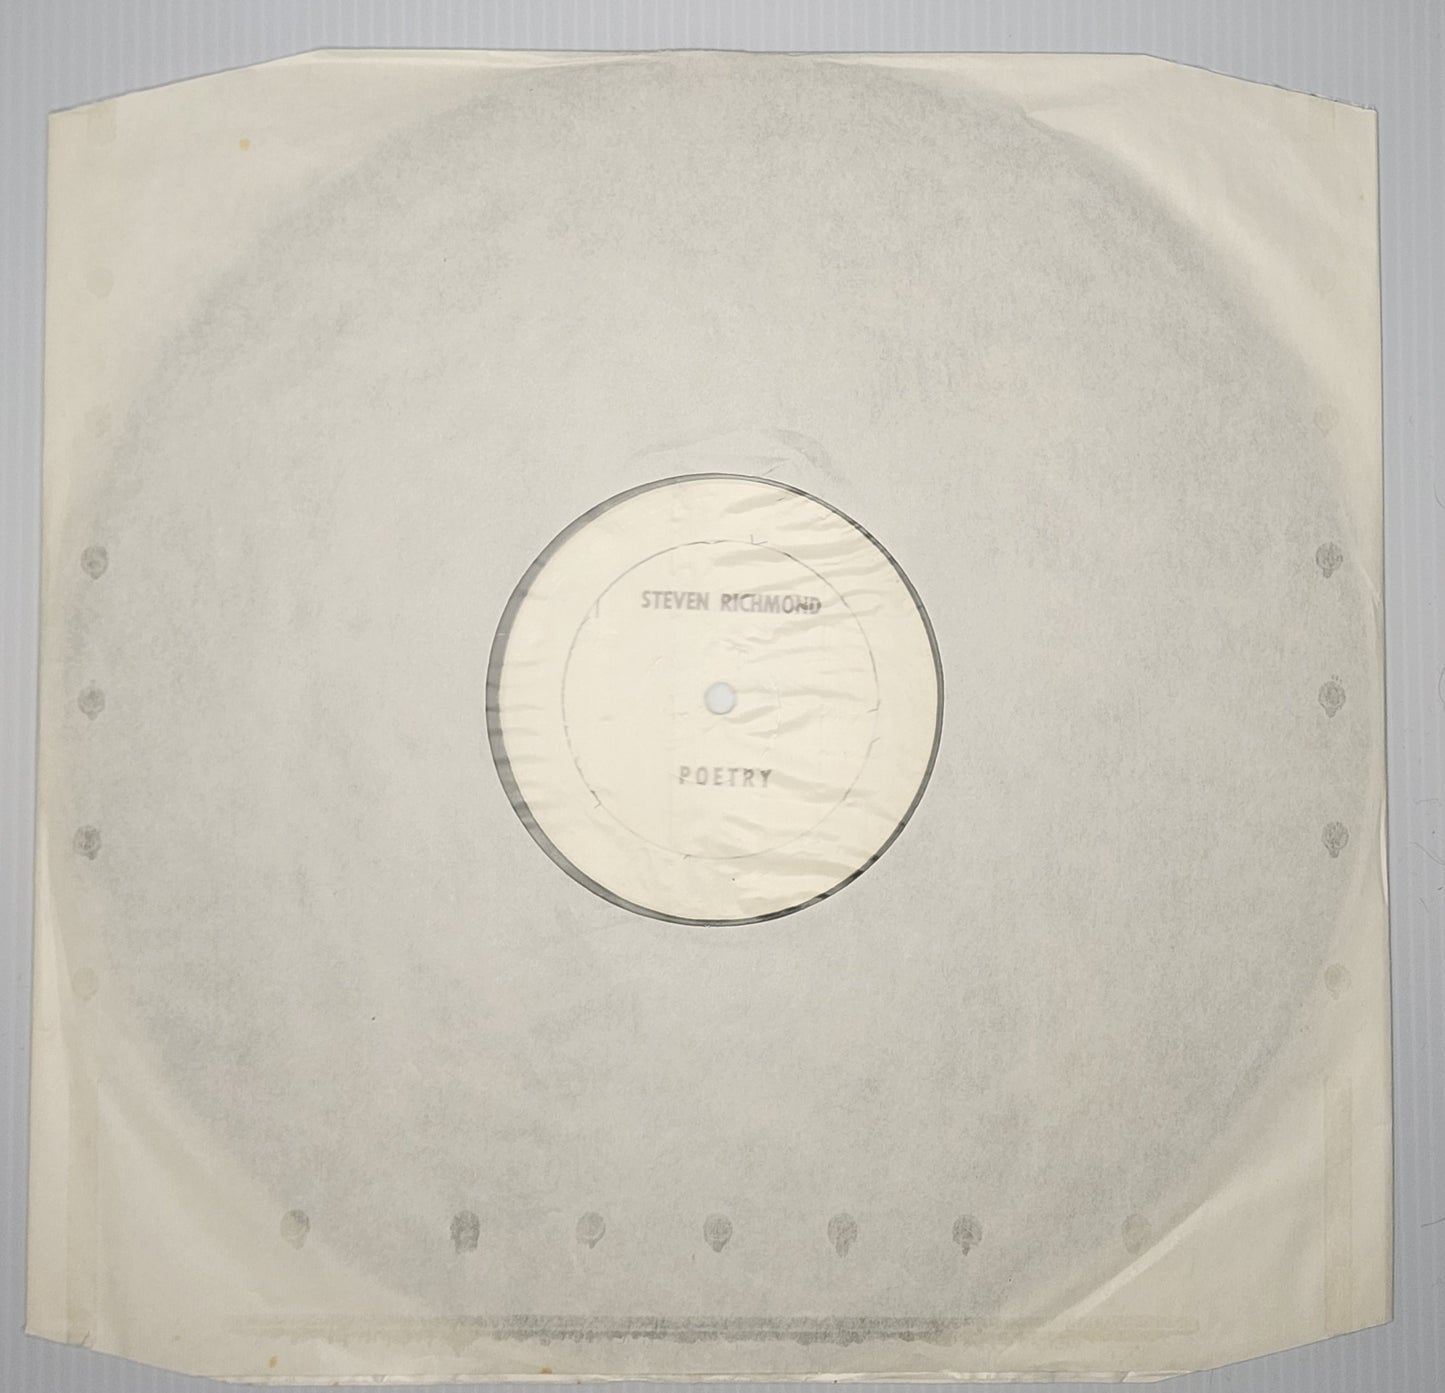 Extremely Rare Vinyl LP, Still in Shrink Wrap: Poetry – Charles Bukowski Steve Richmon (1968)